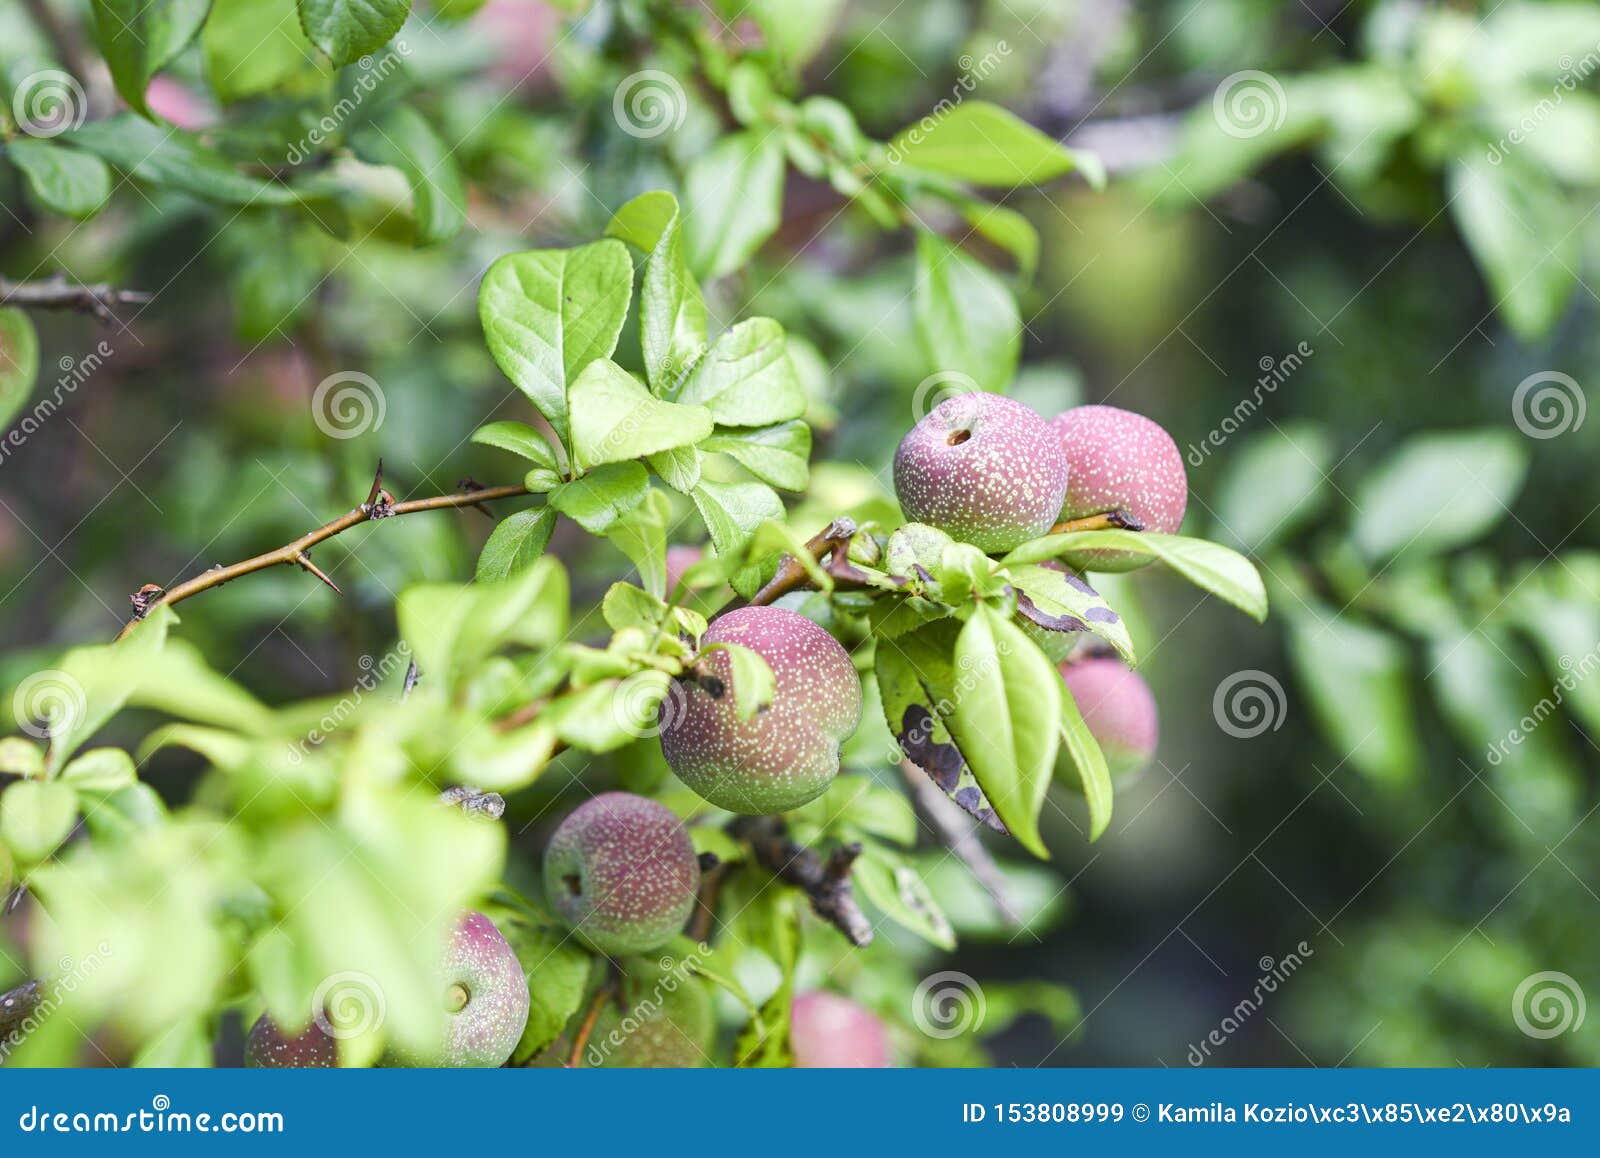 the fruit of quince blooming in garden